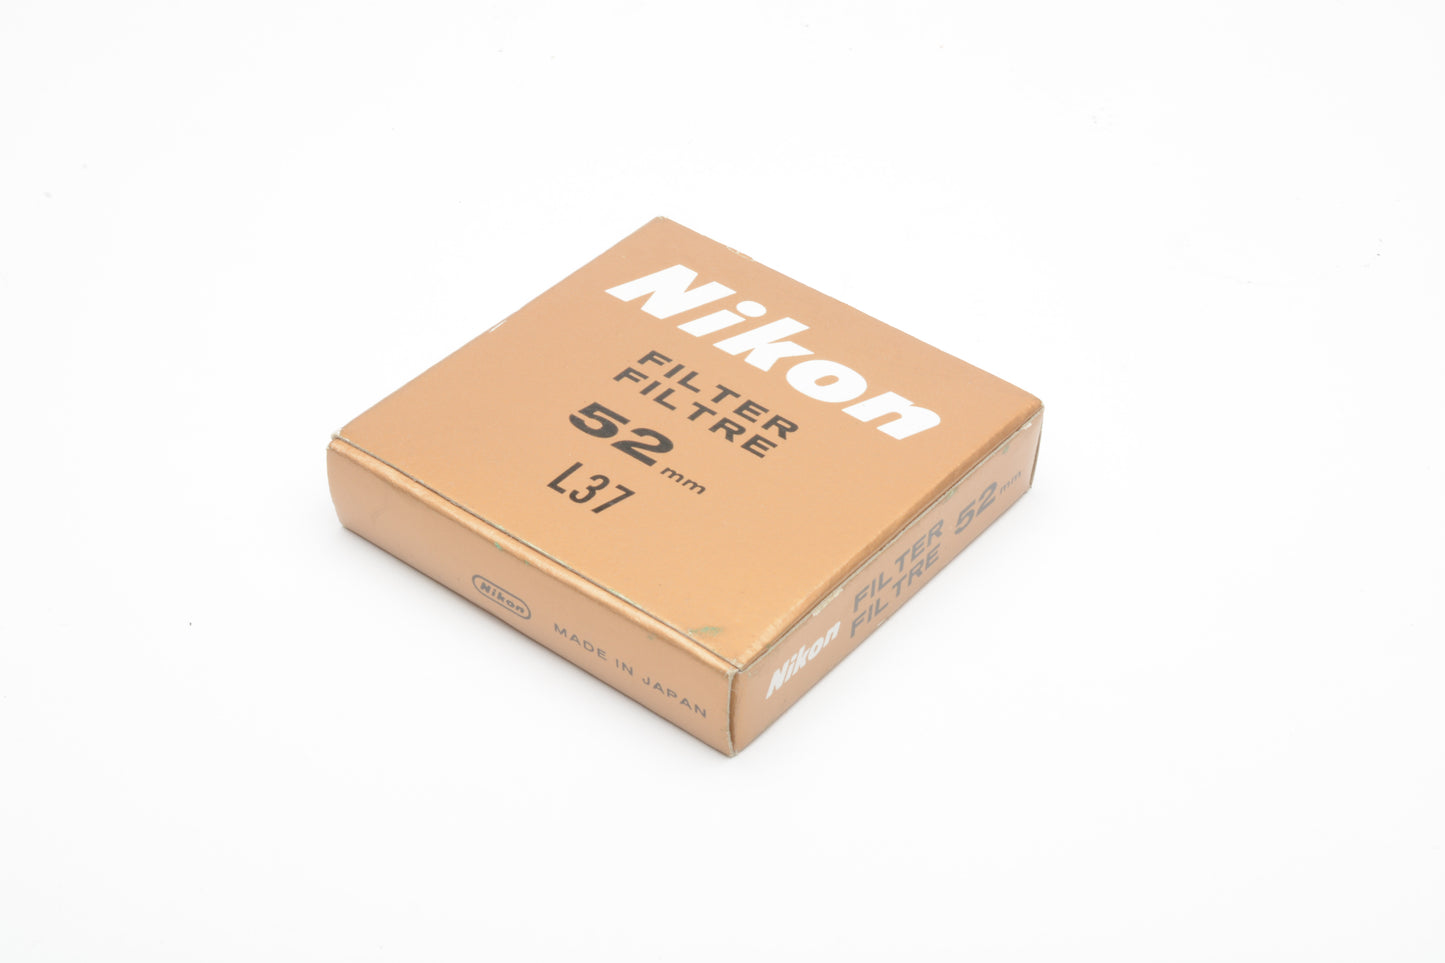 Nikon L37 52mm UV filter, NIB